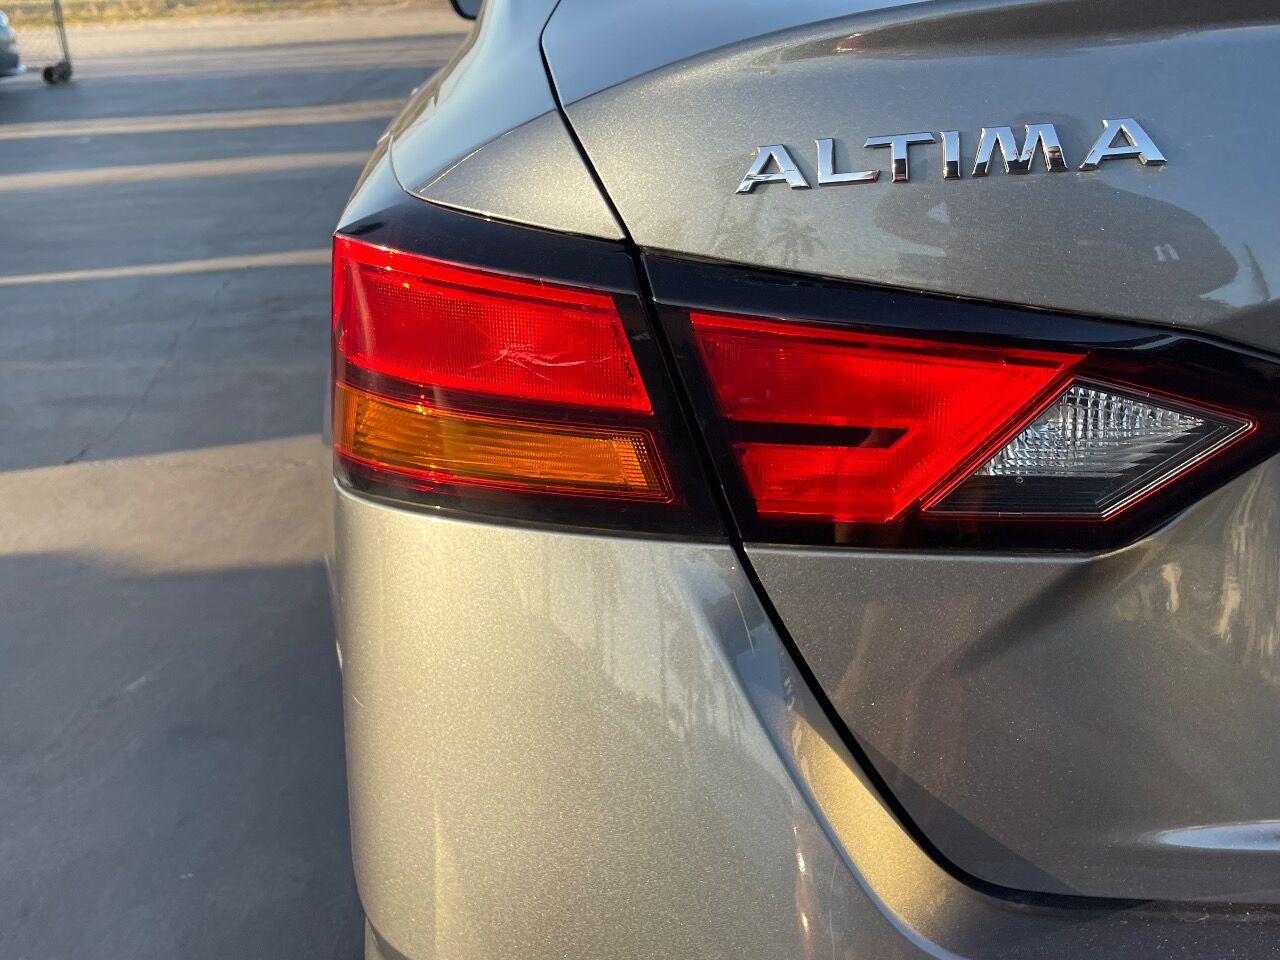 2019 NISSAN Altima Sedan - $18,900